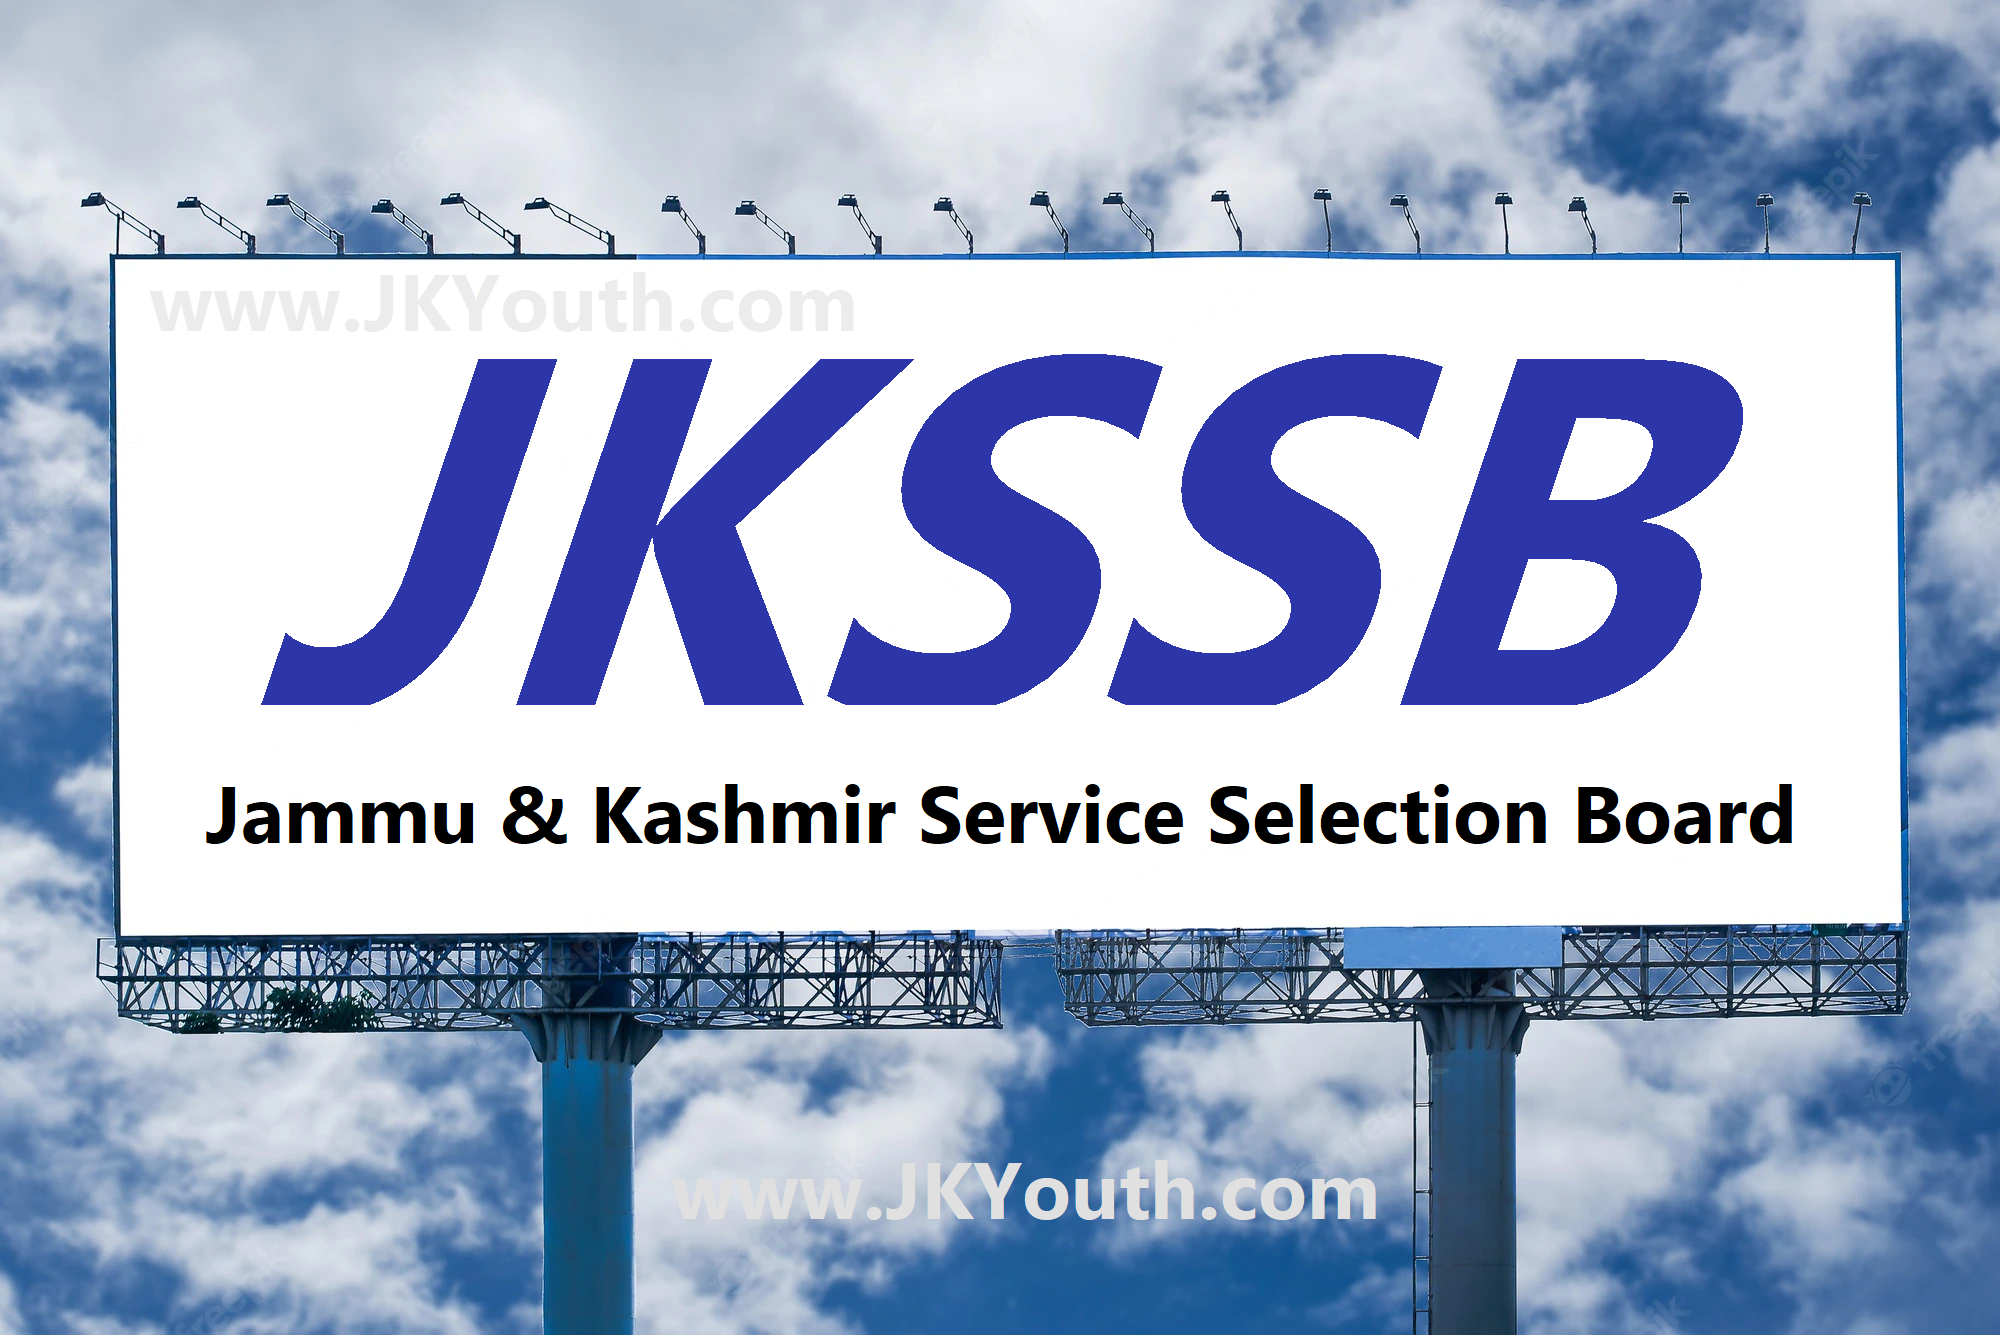 JKSSB, Jammu and Kashmir Service Selection Board